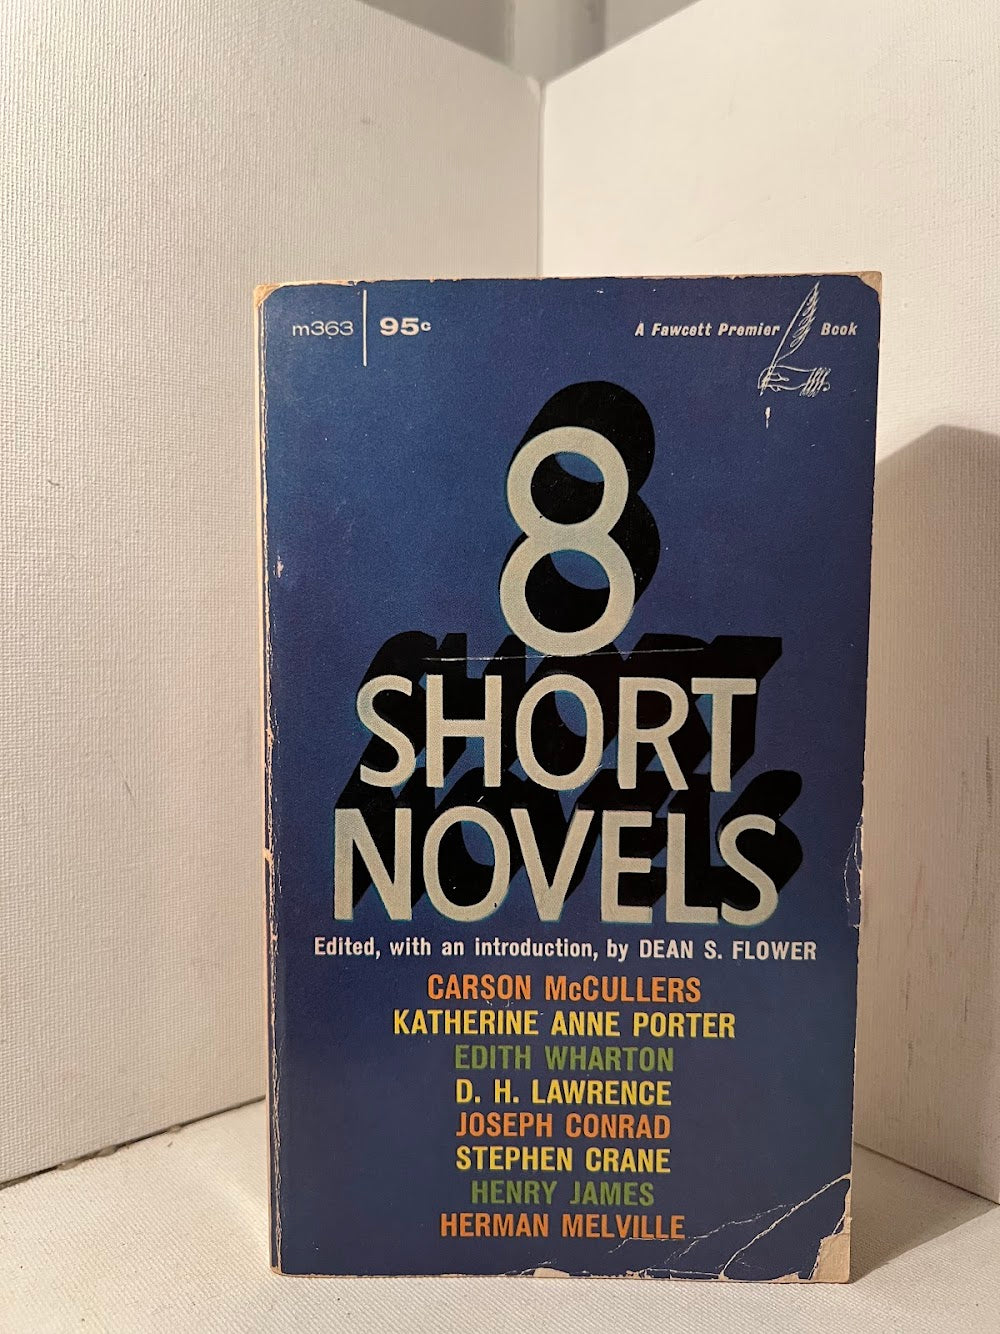 8 Short Novels